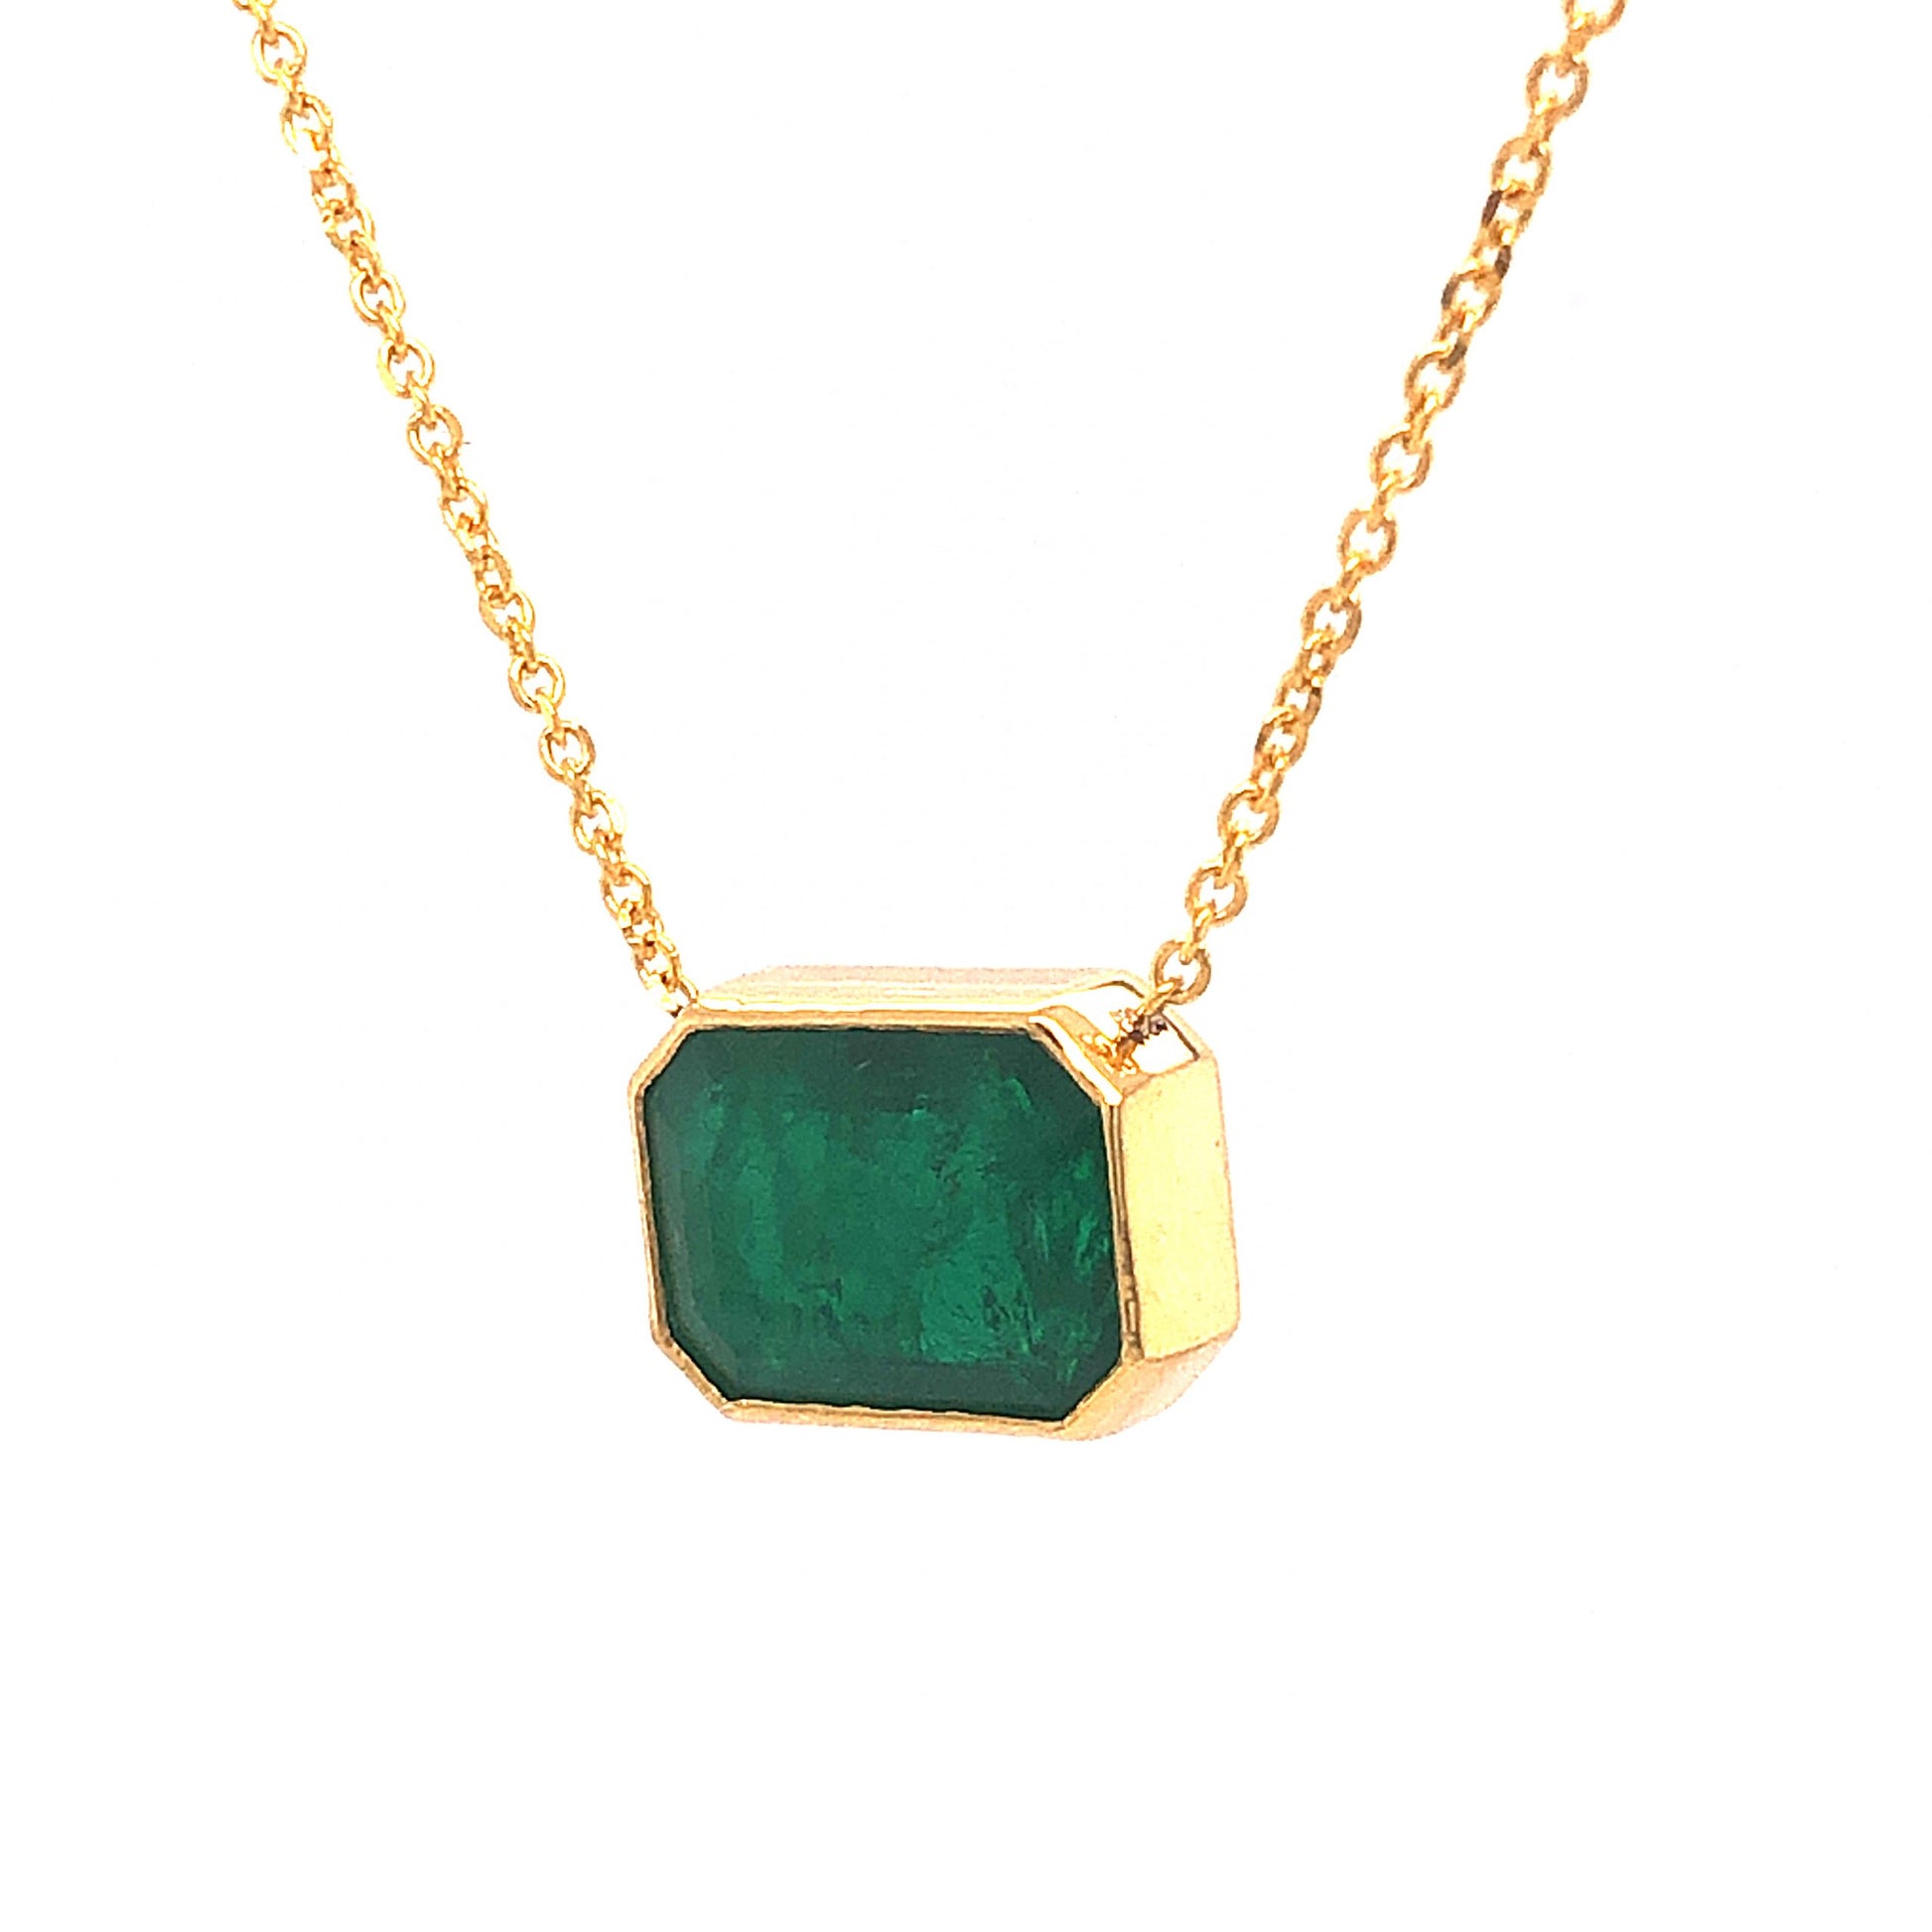 Bezel Set Emerald Pendant Necklace in 14k Yellow GoldComposition: 14 Karat Yellow GoldTotal Gram Weight: 2.75 gInscription: 14k 3.85 ct